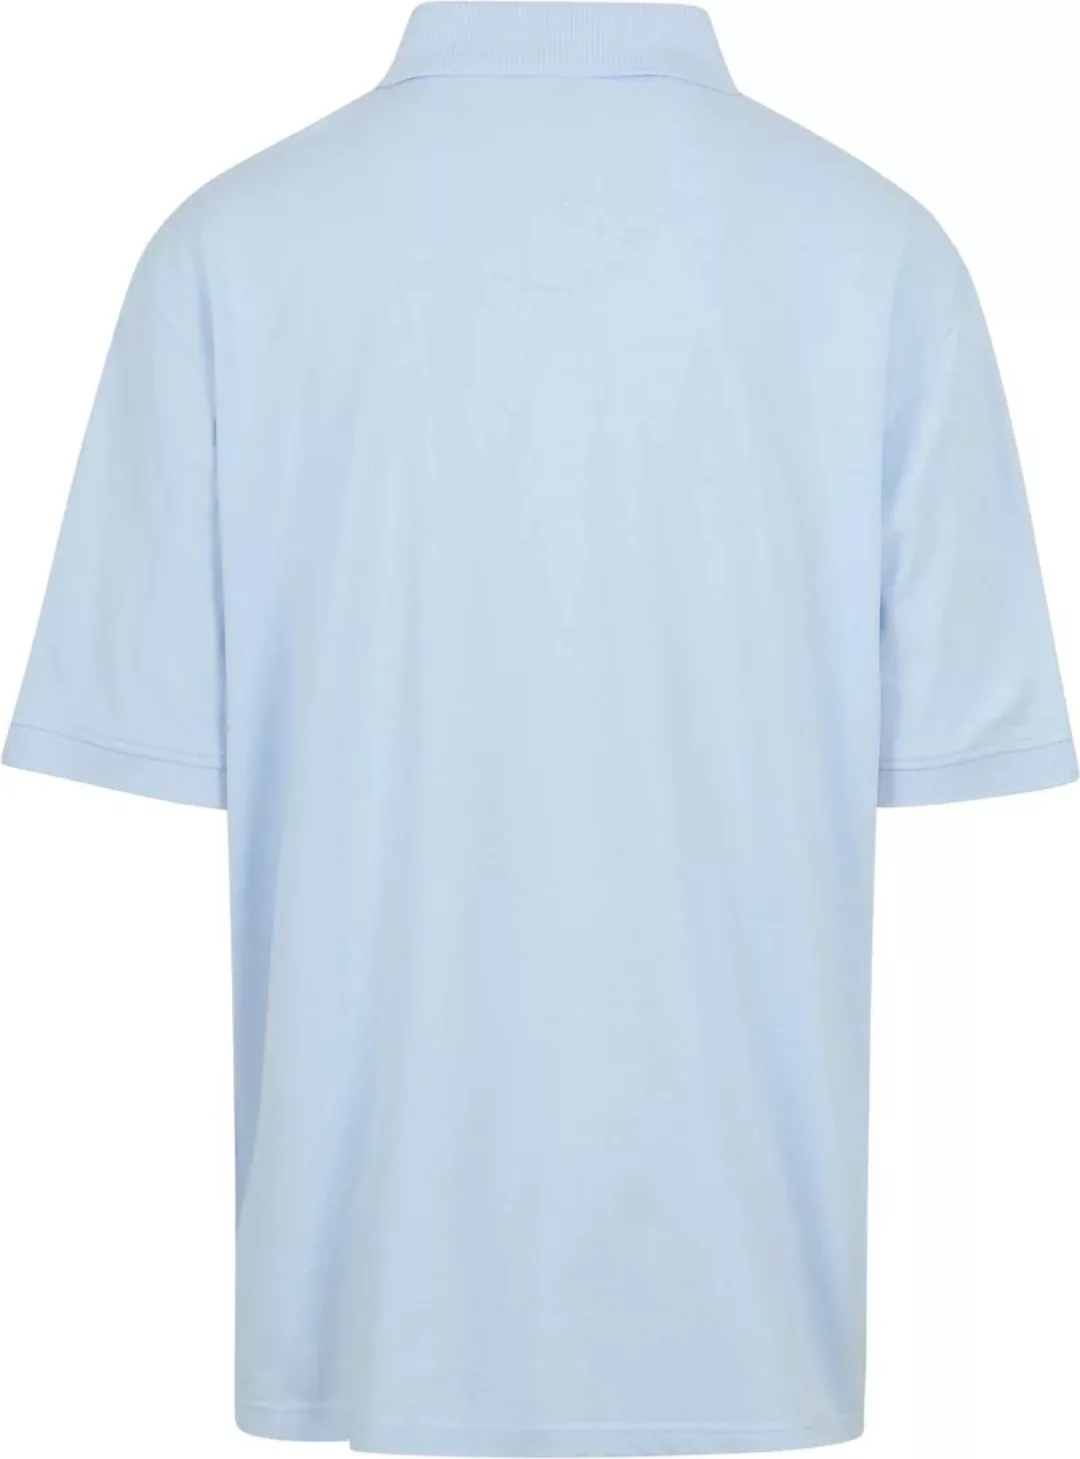 Tommy Hilfiger Big and Tall Poloshirt Hellblau - Größe XXL günstig online kaufen